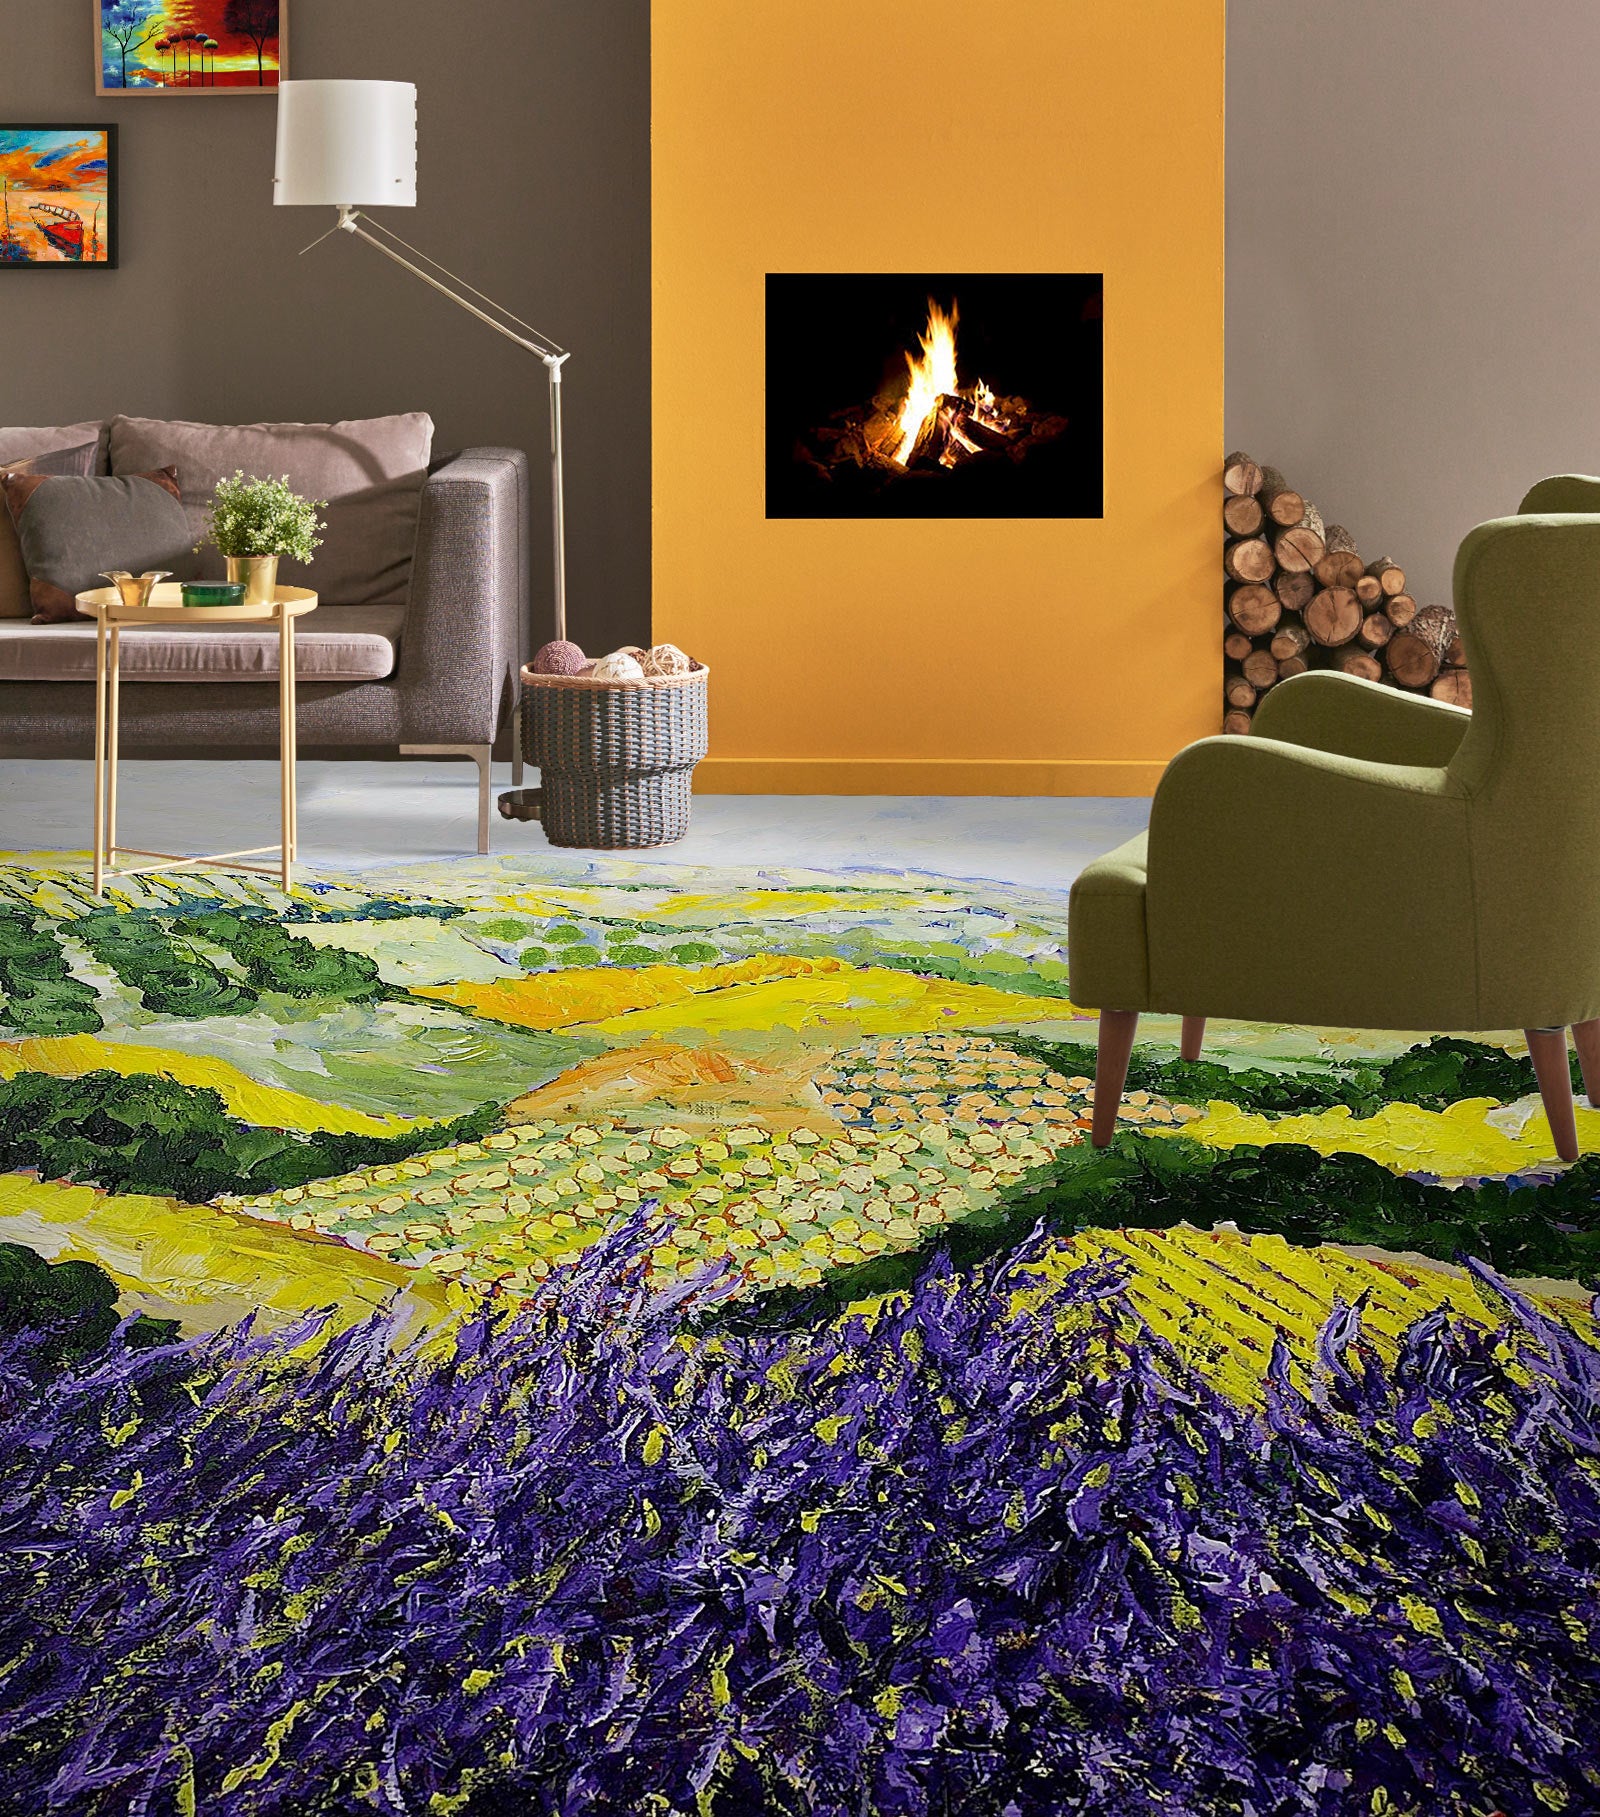 3D Field Purple Flowers 9526 Allan P. Friedlander Floor Mural